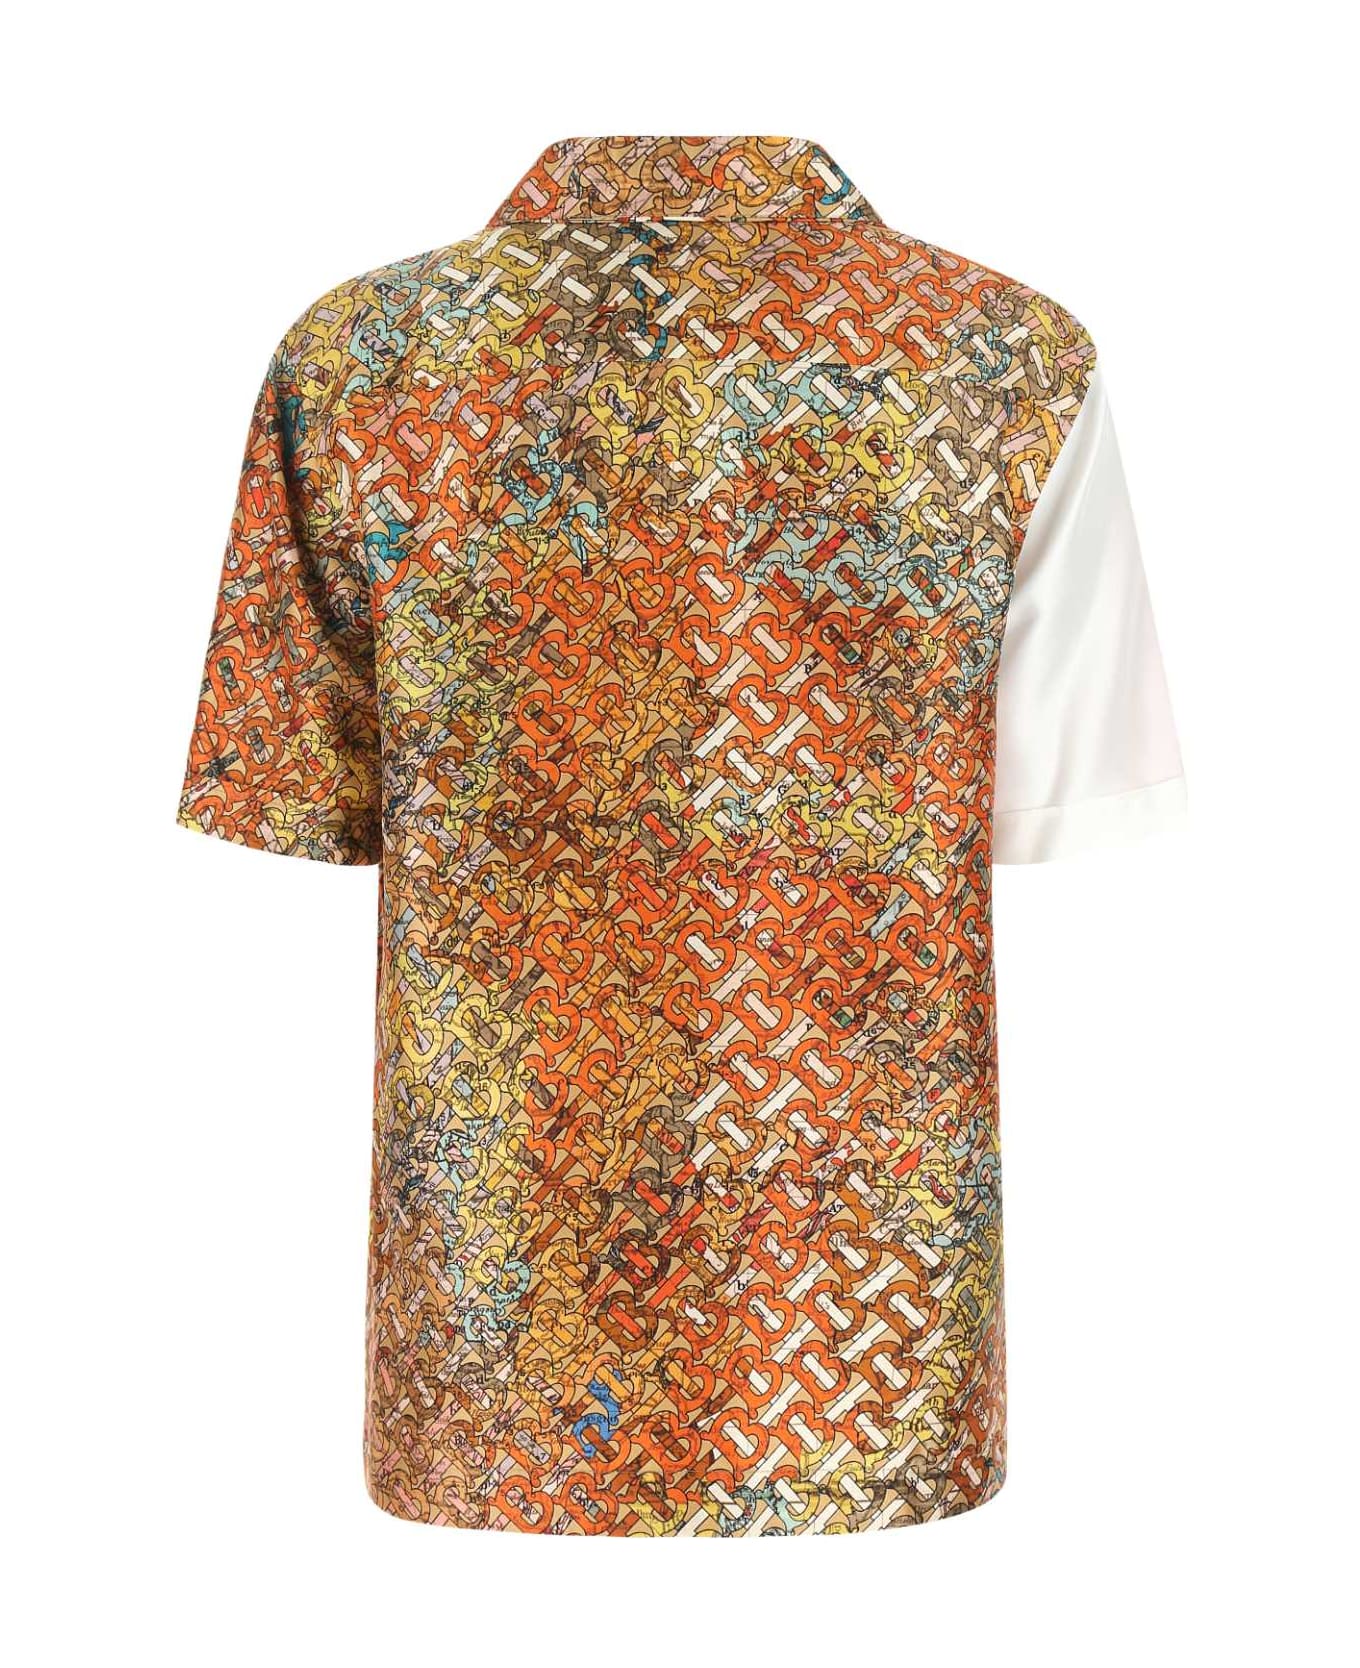 Burberry Printed Silk Shirt - A1953 シャツ